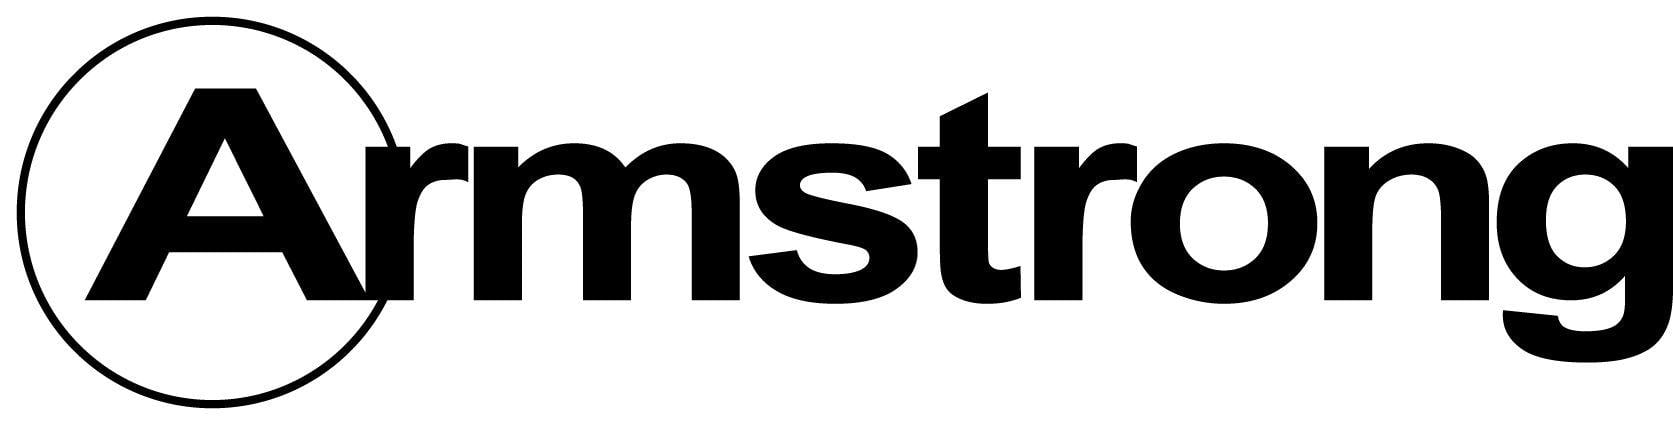 World Industries Logo - Armstrong World Industries logo